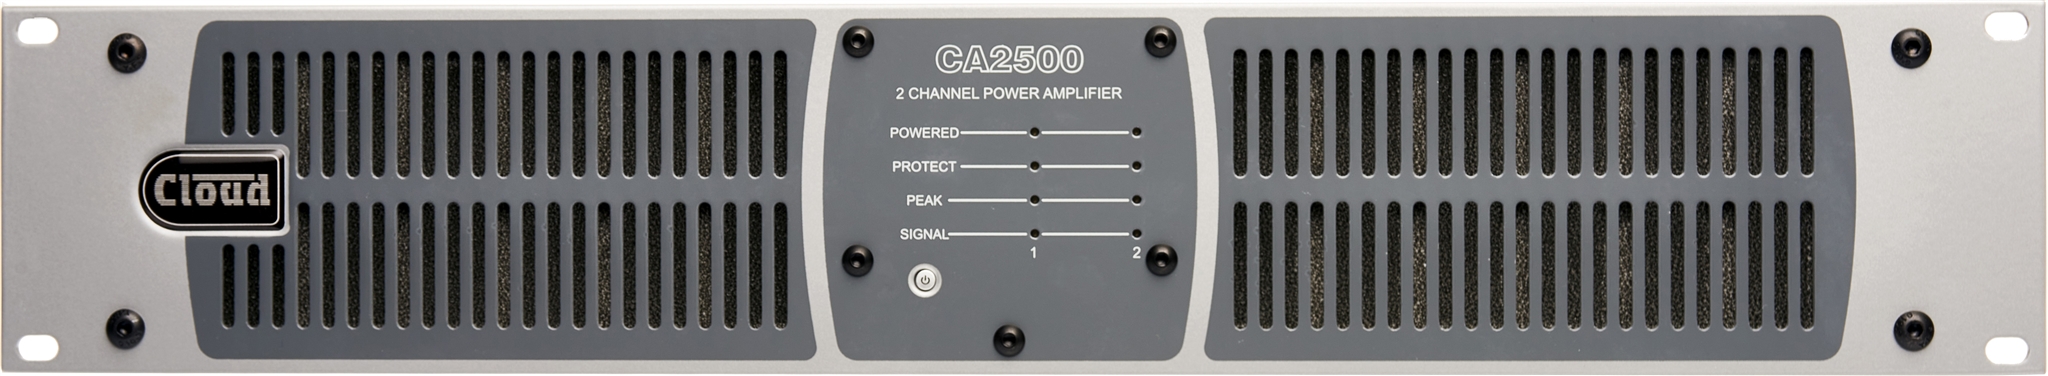 2 Channel Amplifier 500w Per Output Channel - CLOUD (ENGLAND) _ CA2500